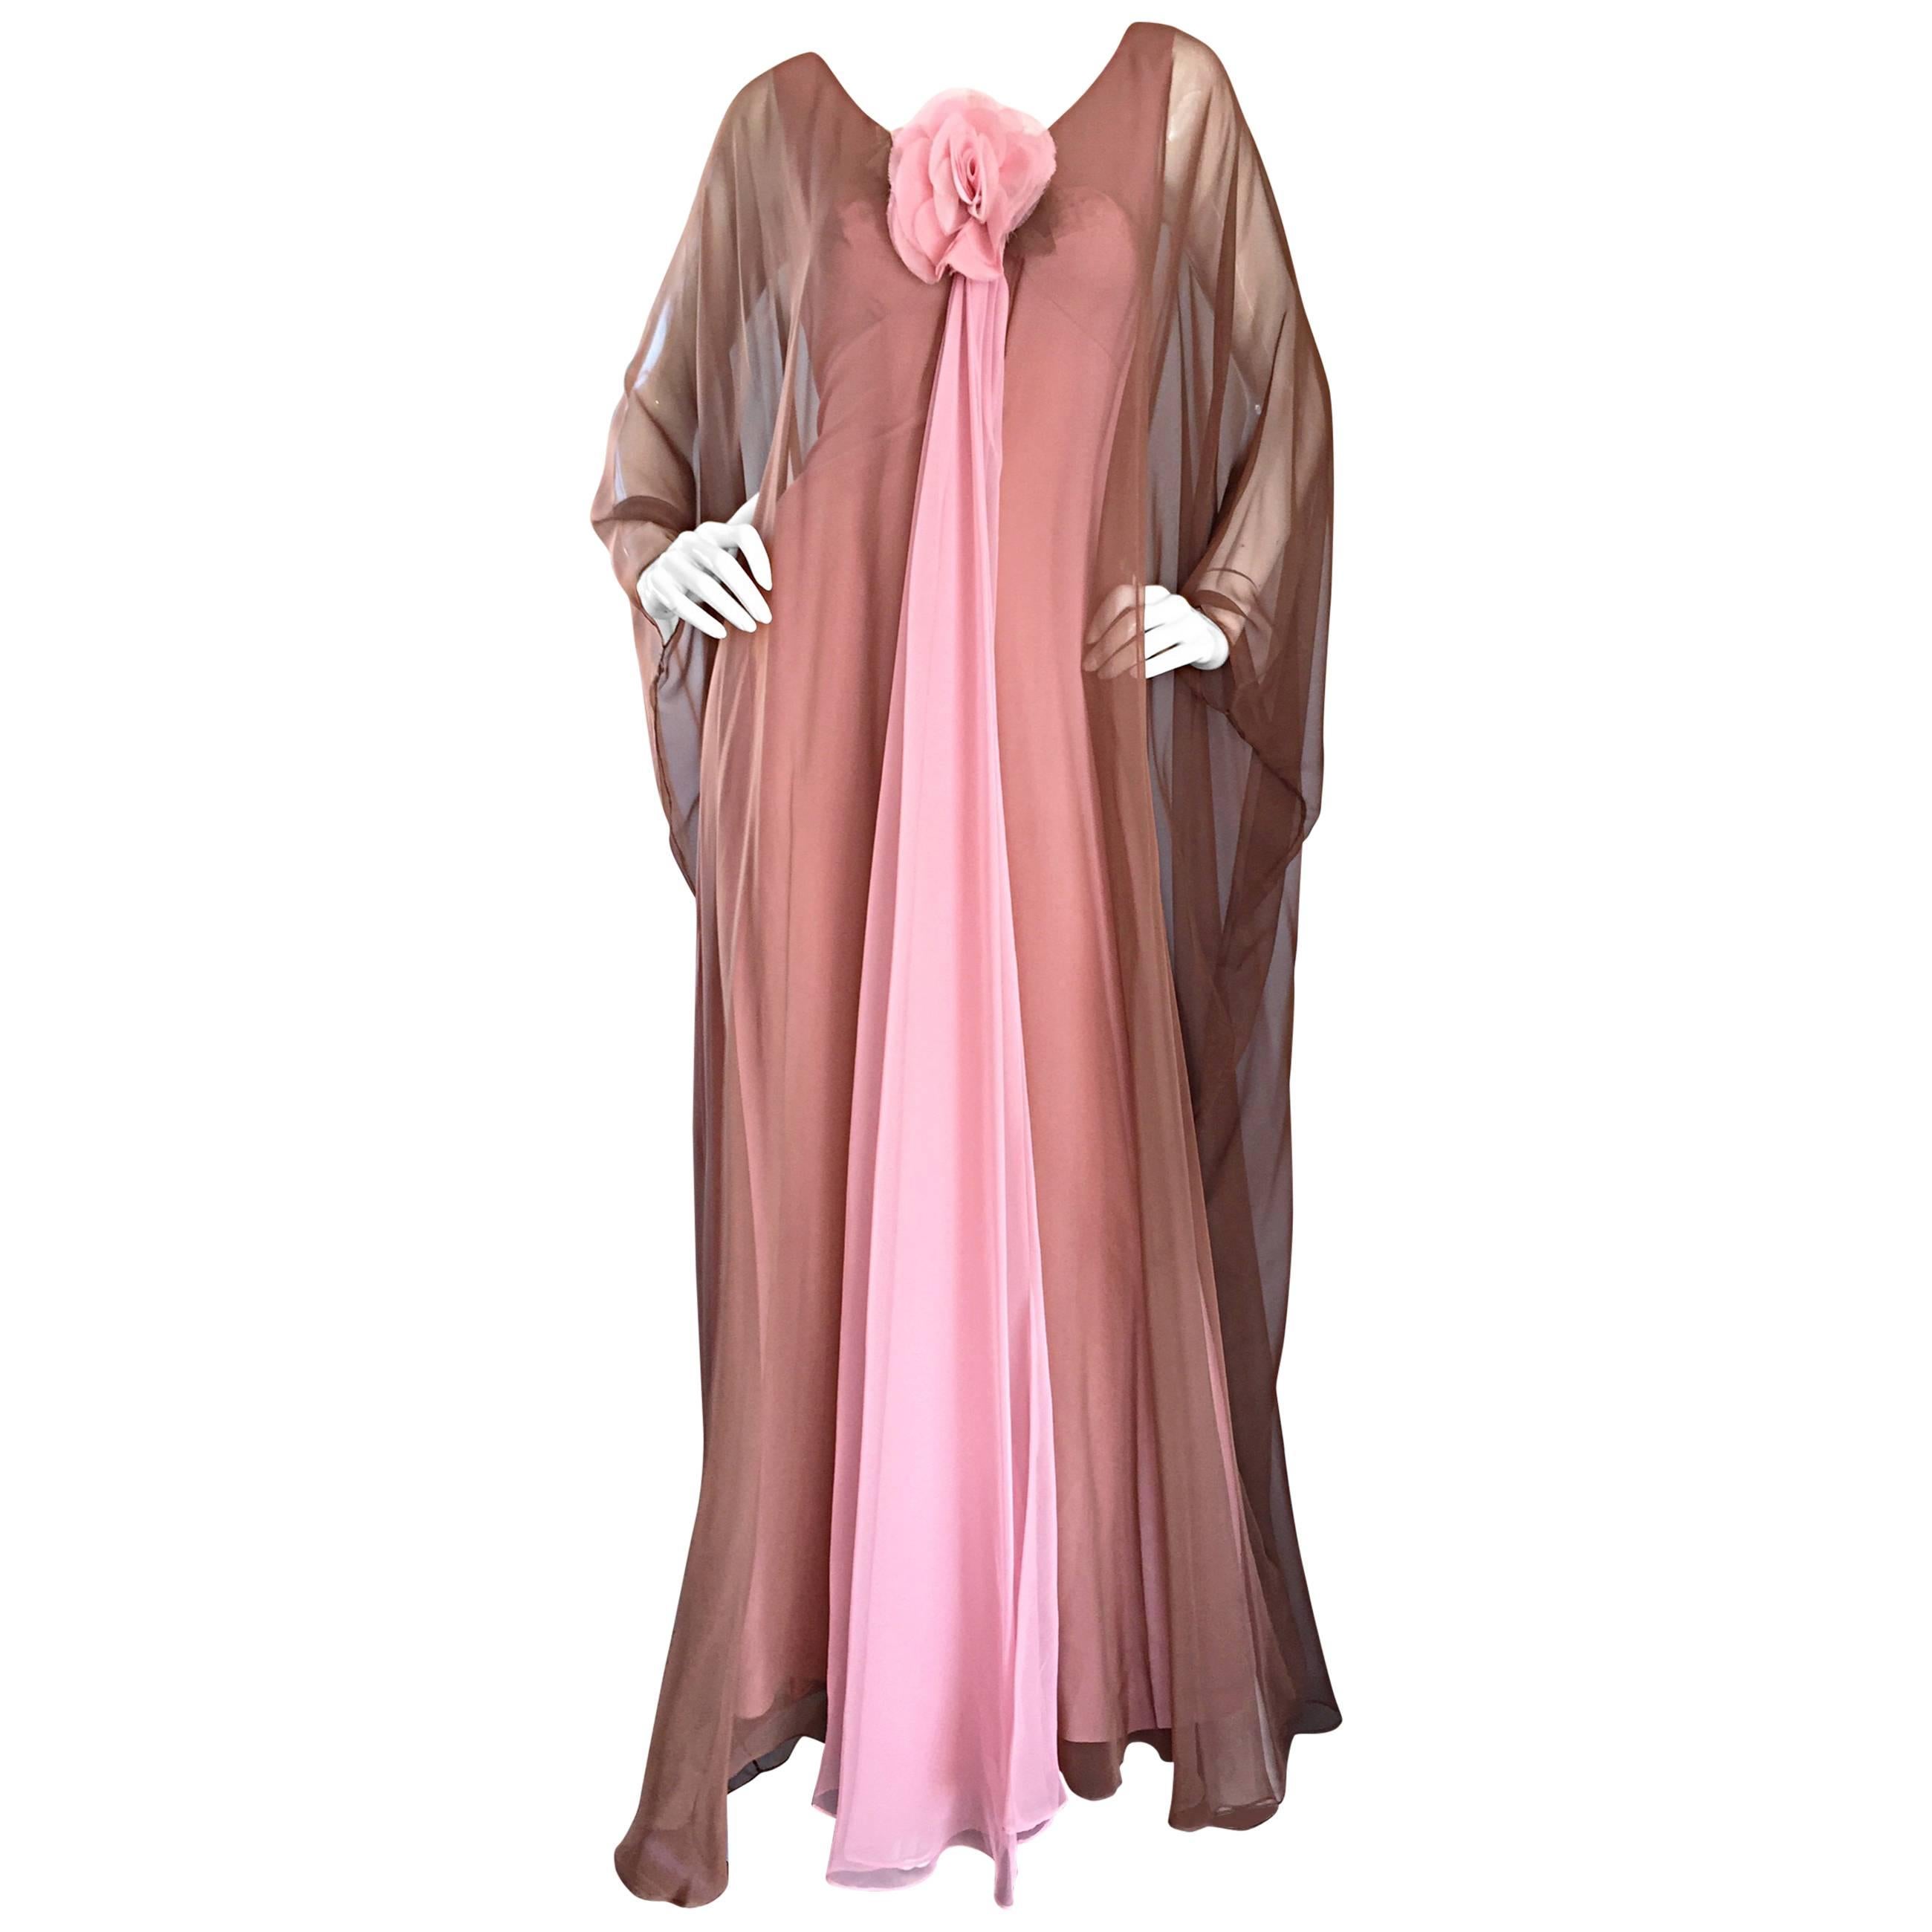 1970s Estevez Pink + Nude Brown 70s Vintage Boho Chiffon Caftan Dress w/ Flower